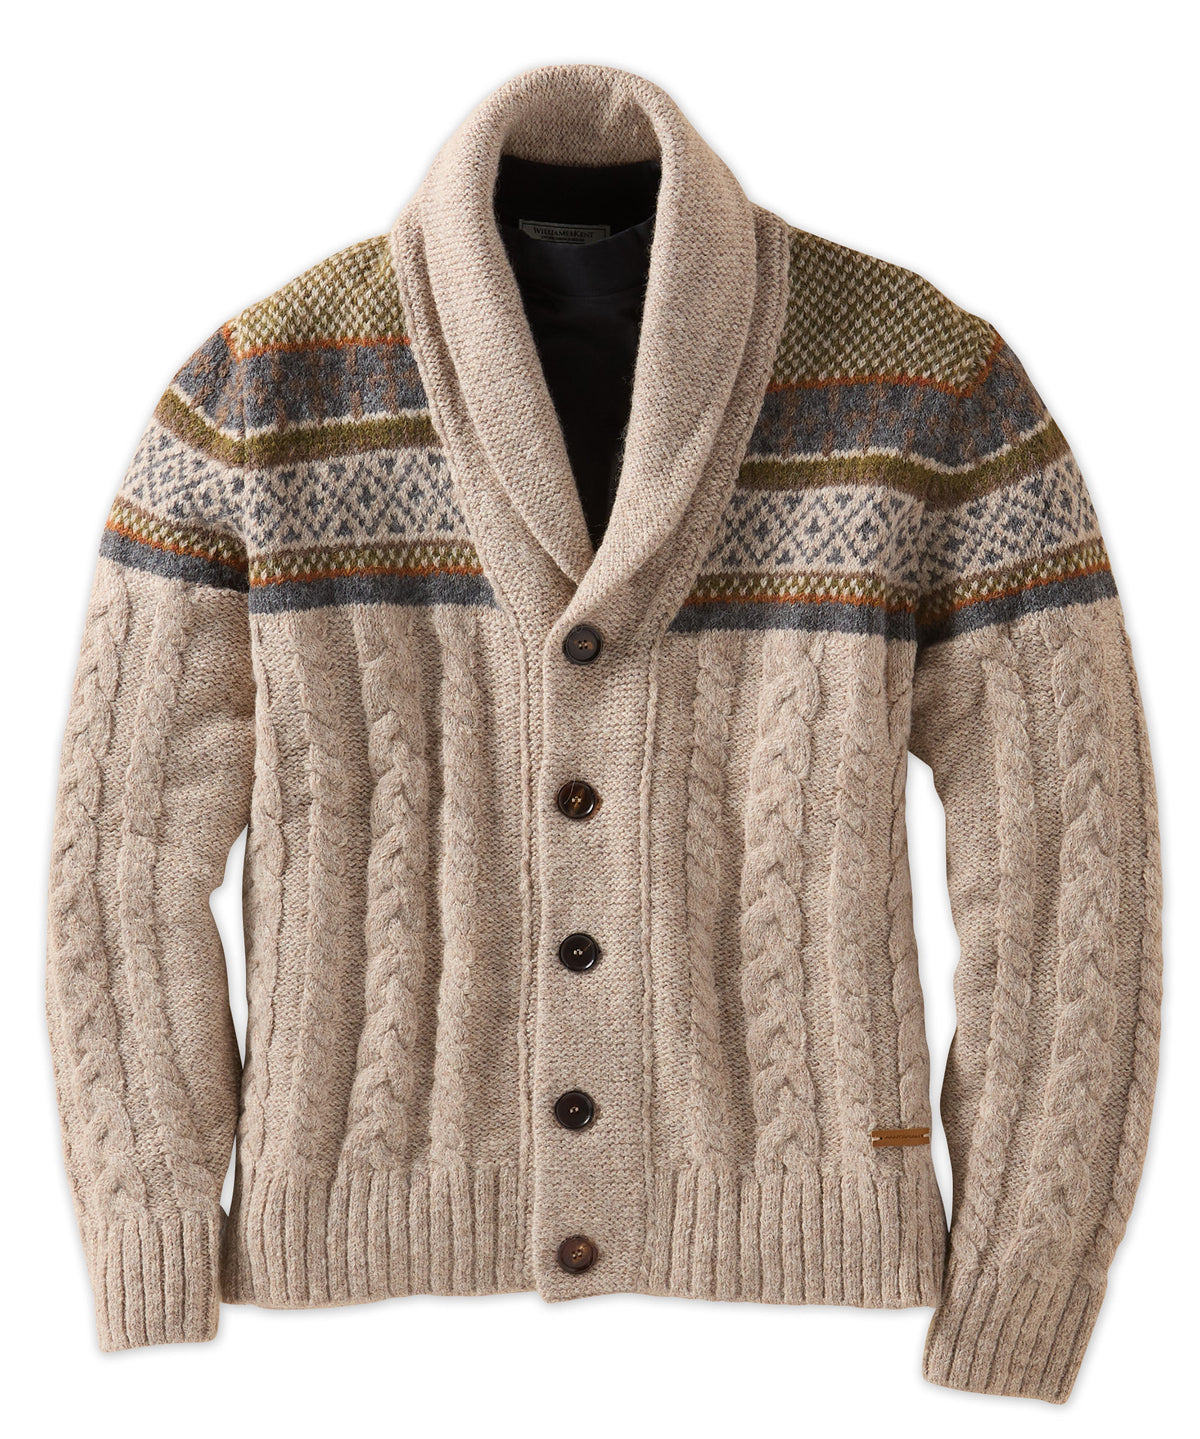 Baby Alpaca Fair Isle Cardigan Sweater